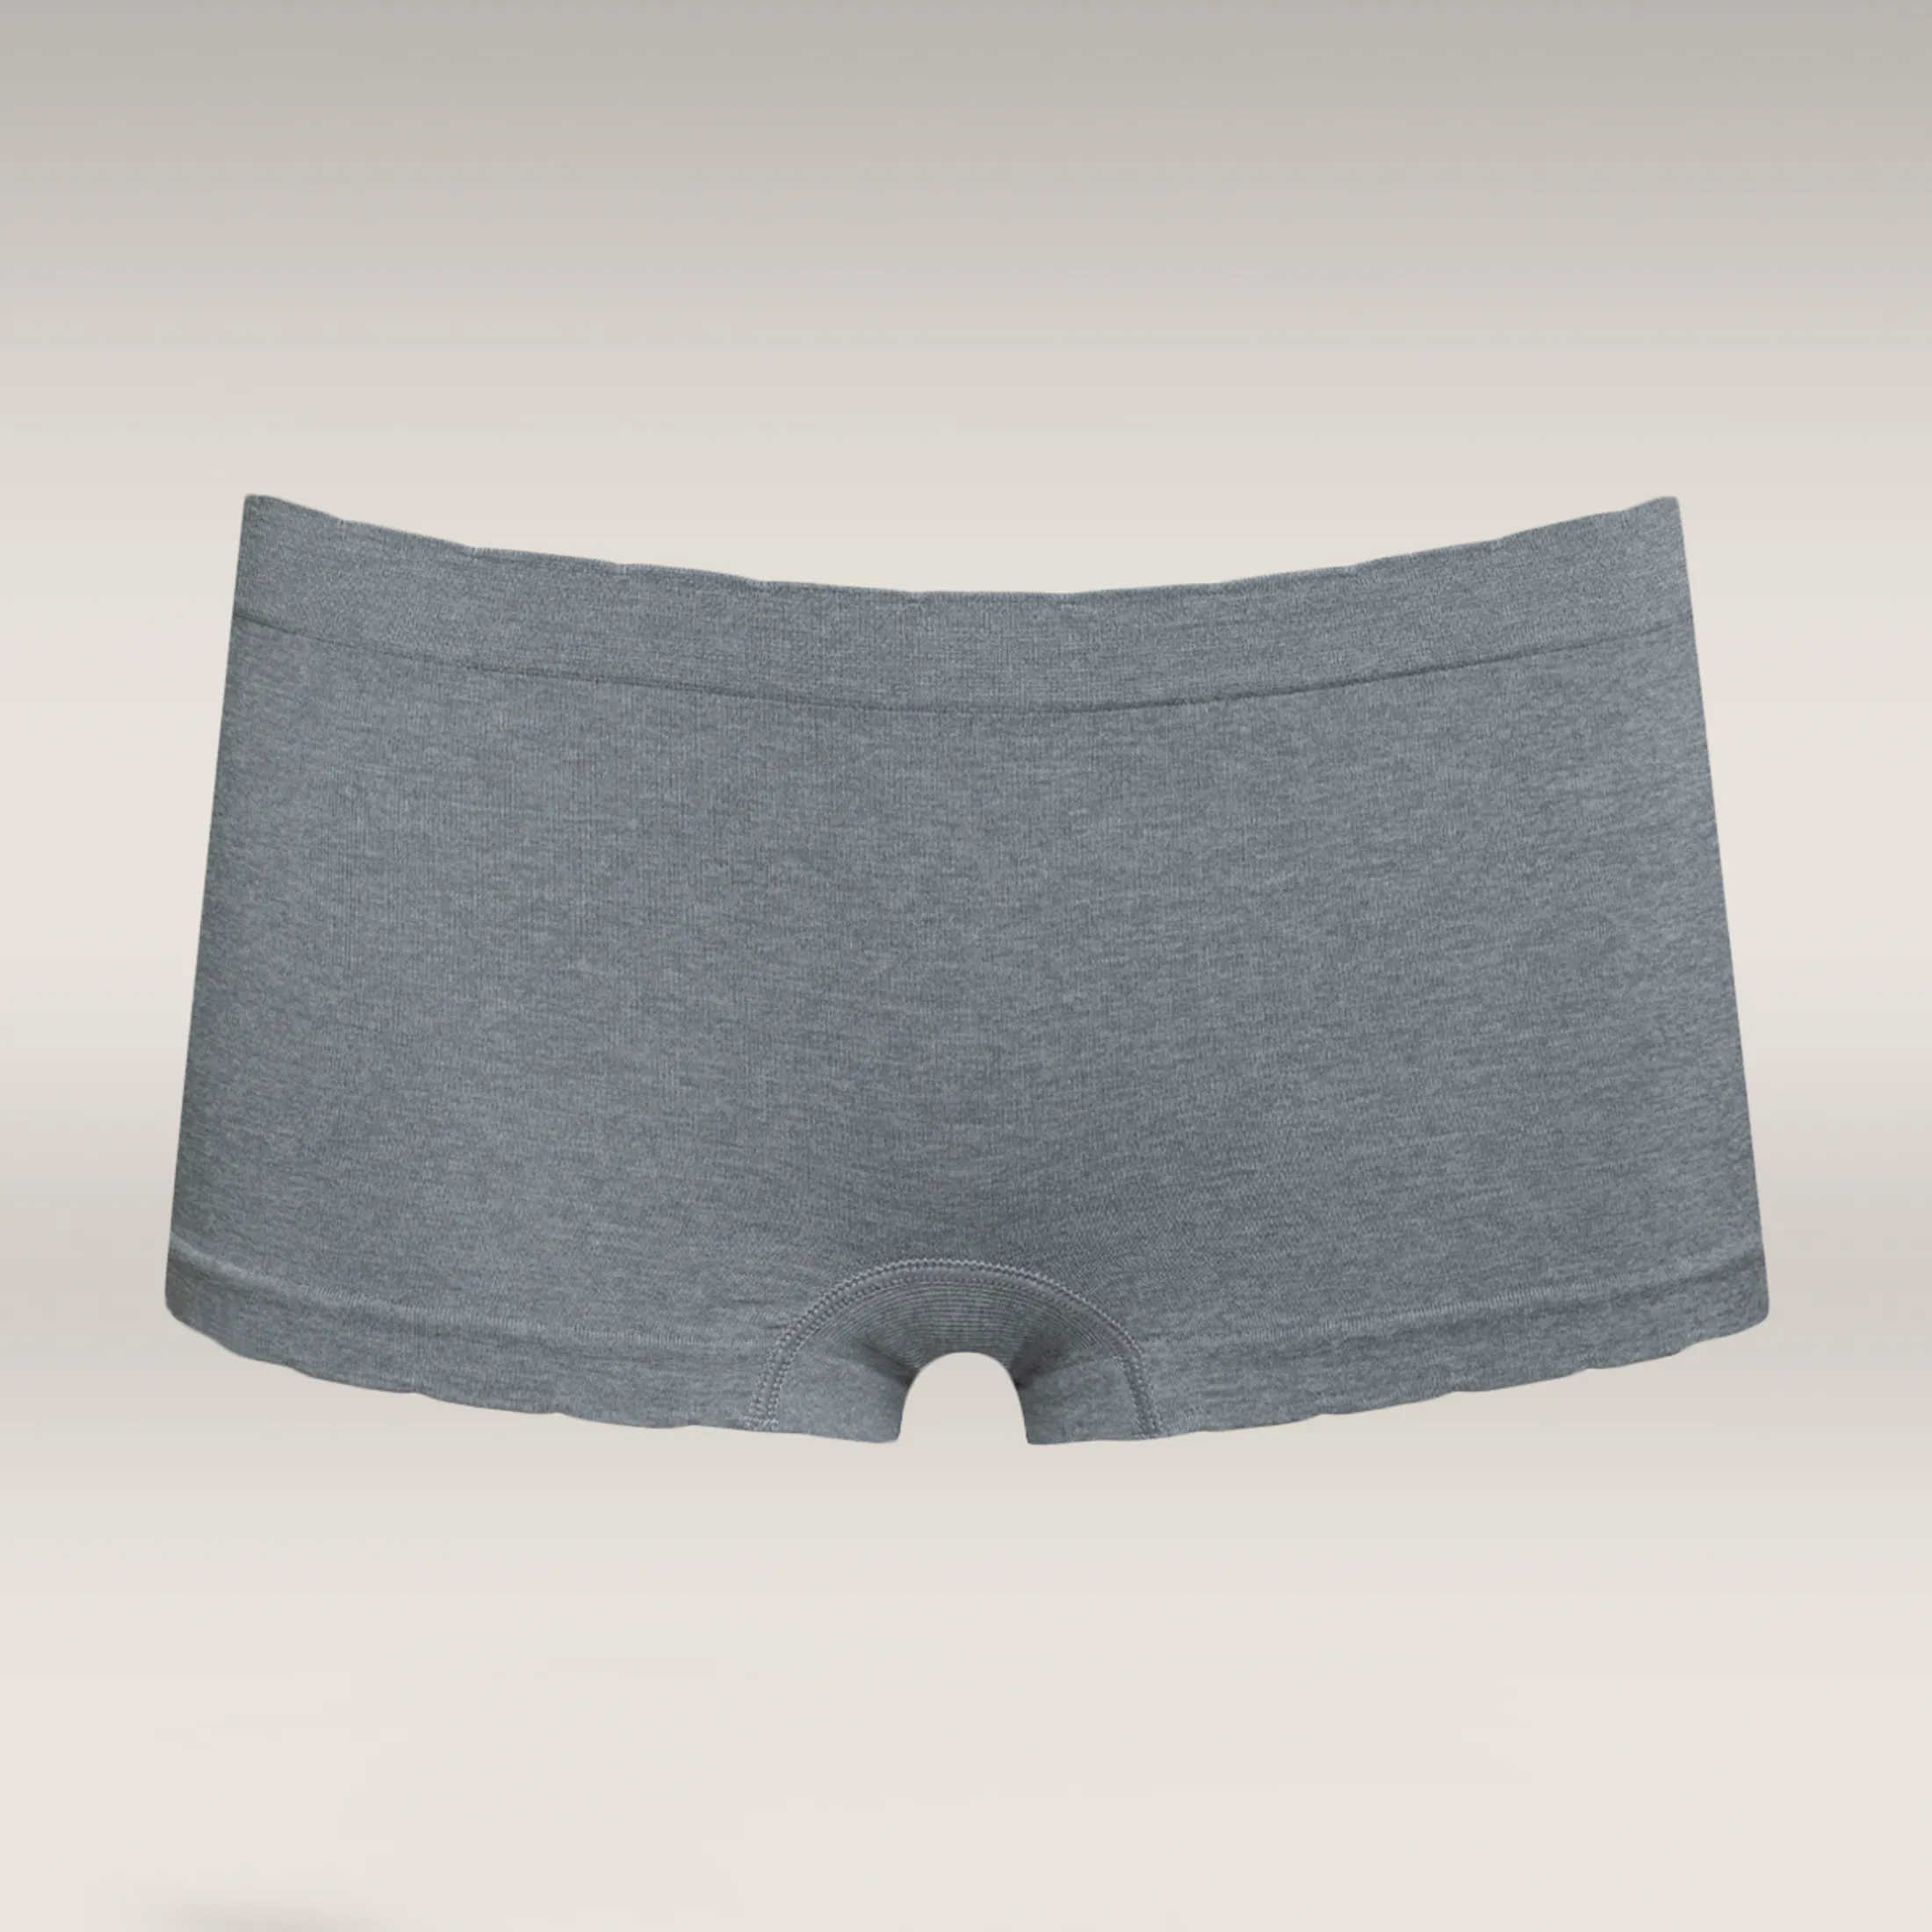 Ackermans - Give your underwear drawer a flirty upgrade